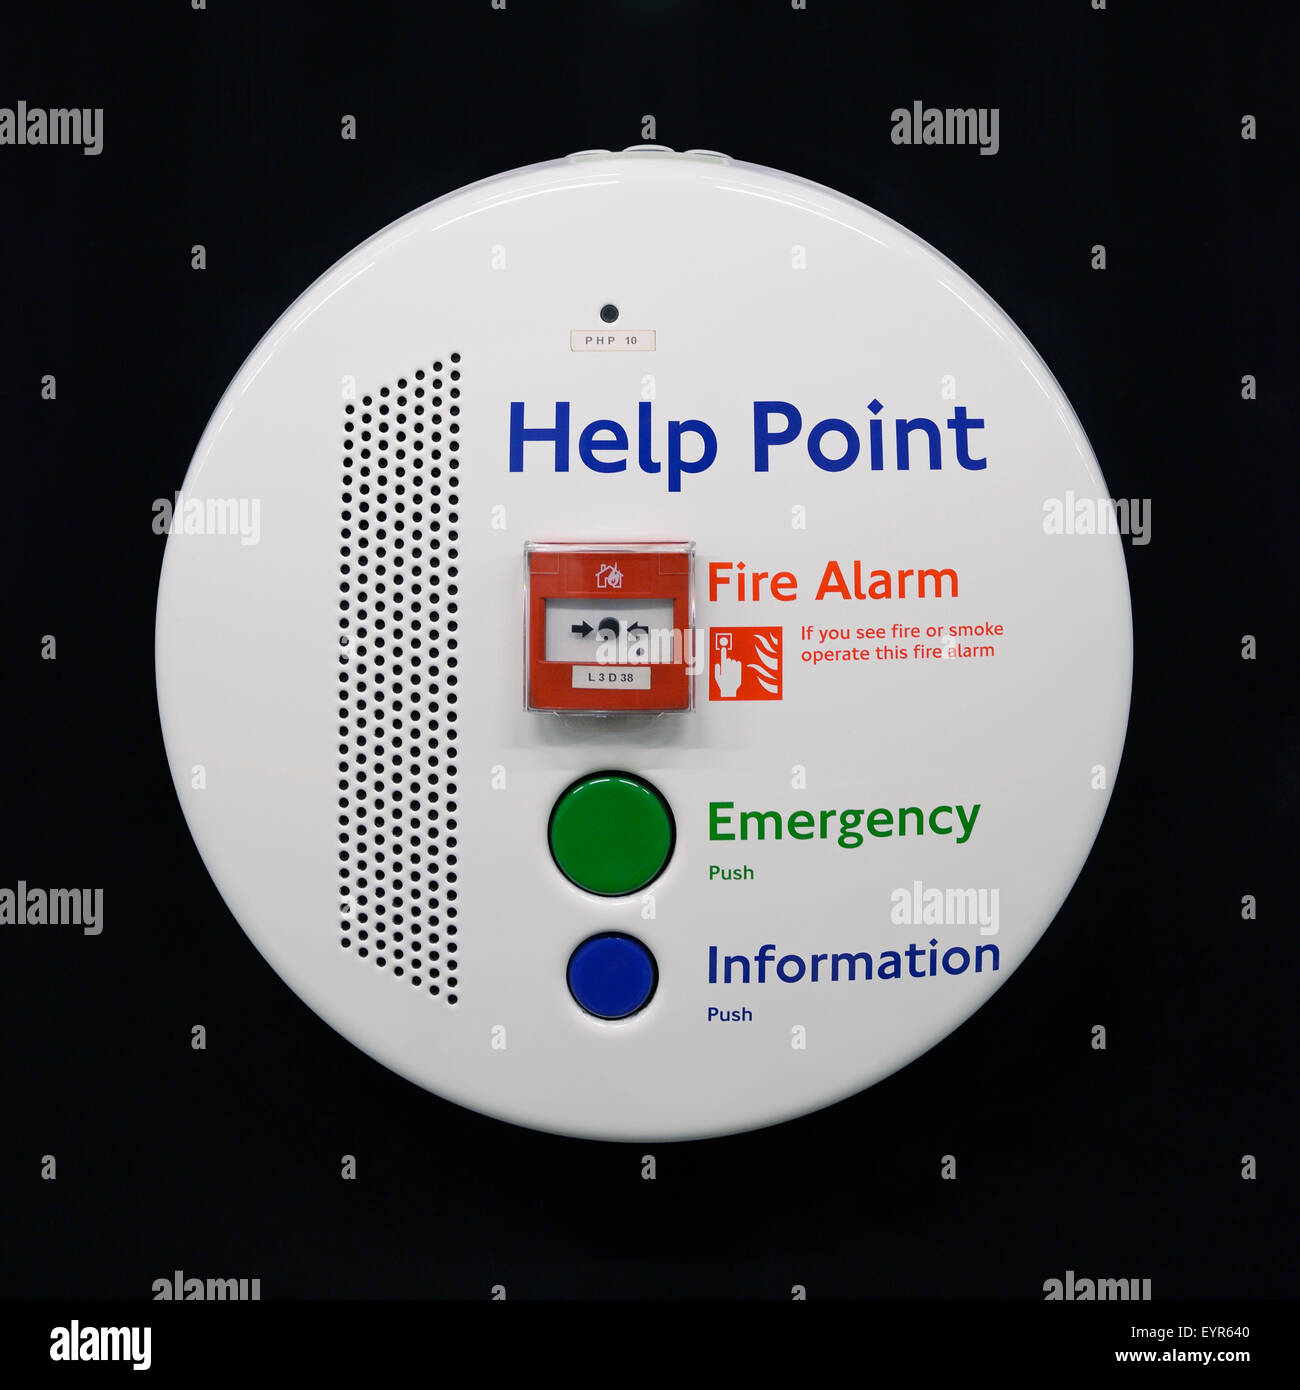 Help Point on a London Underground Platform. Stock Photo